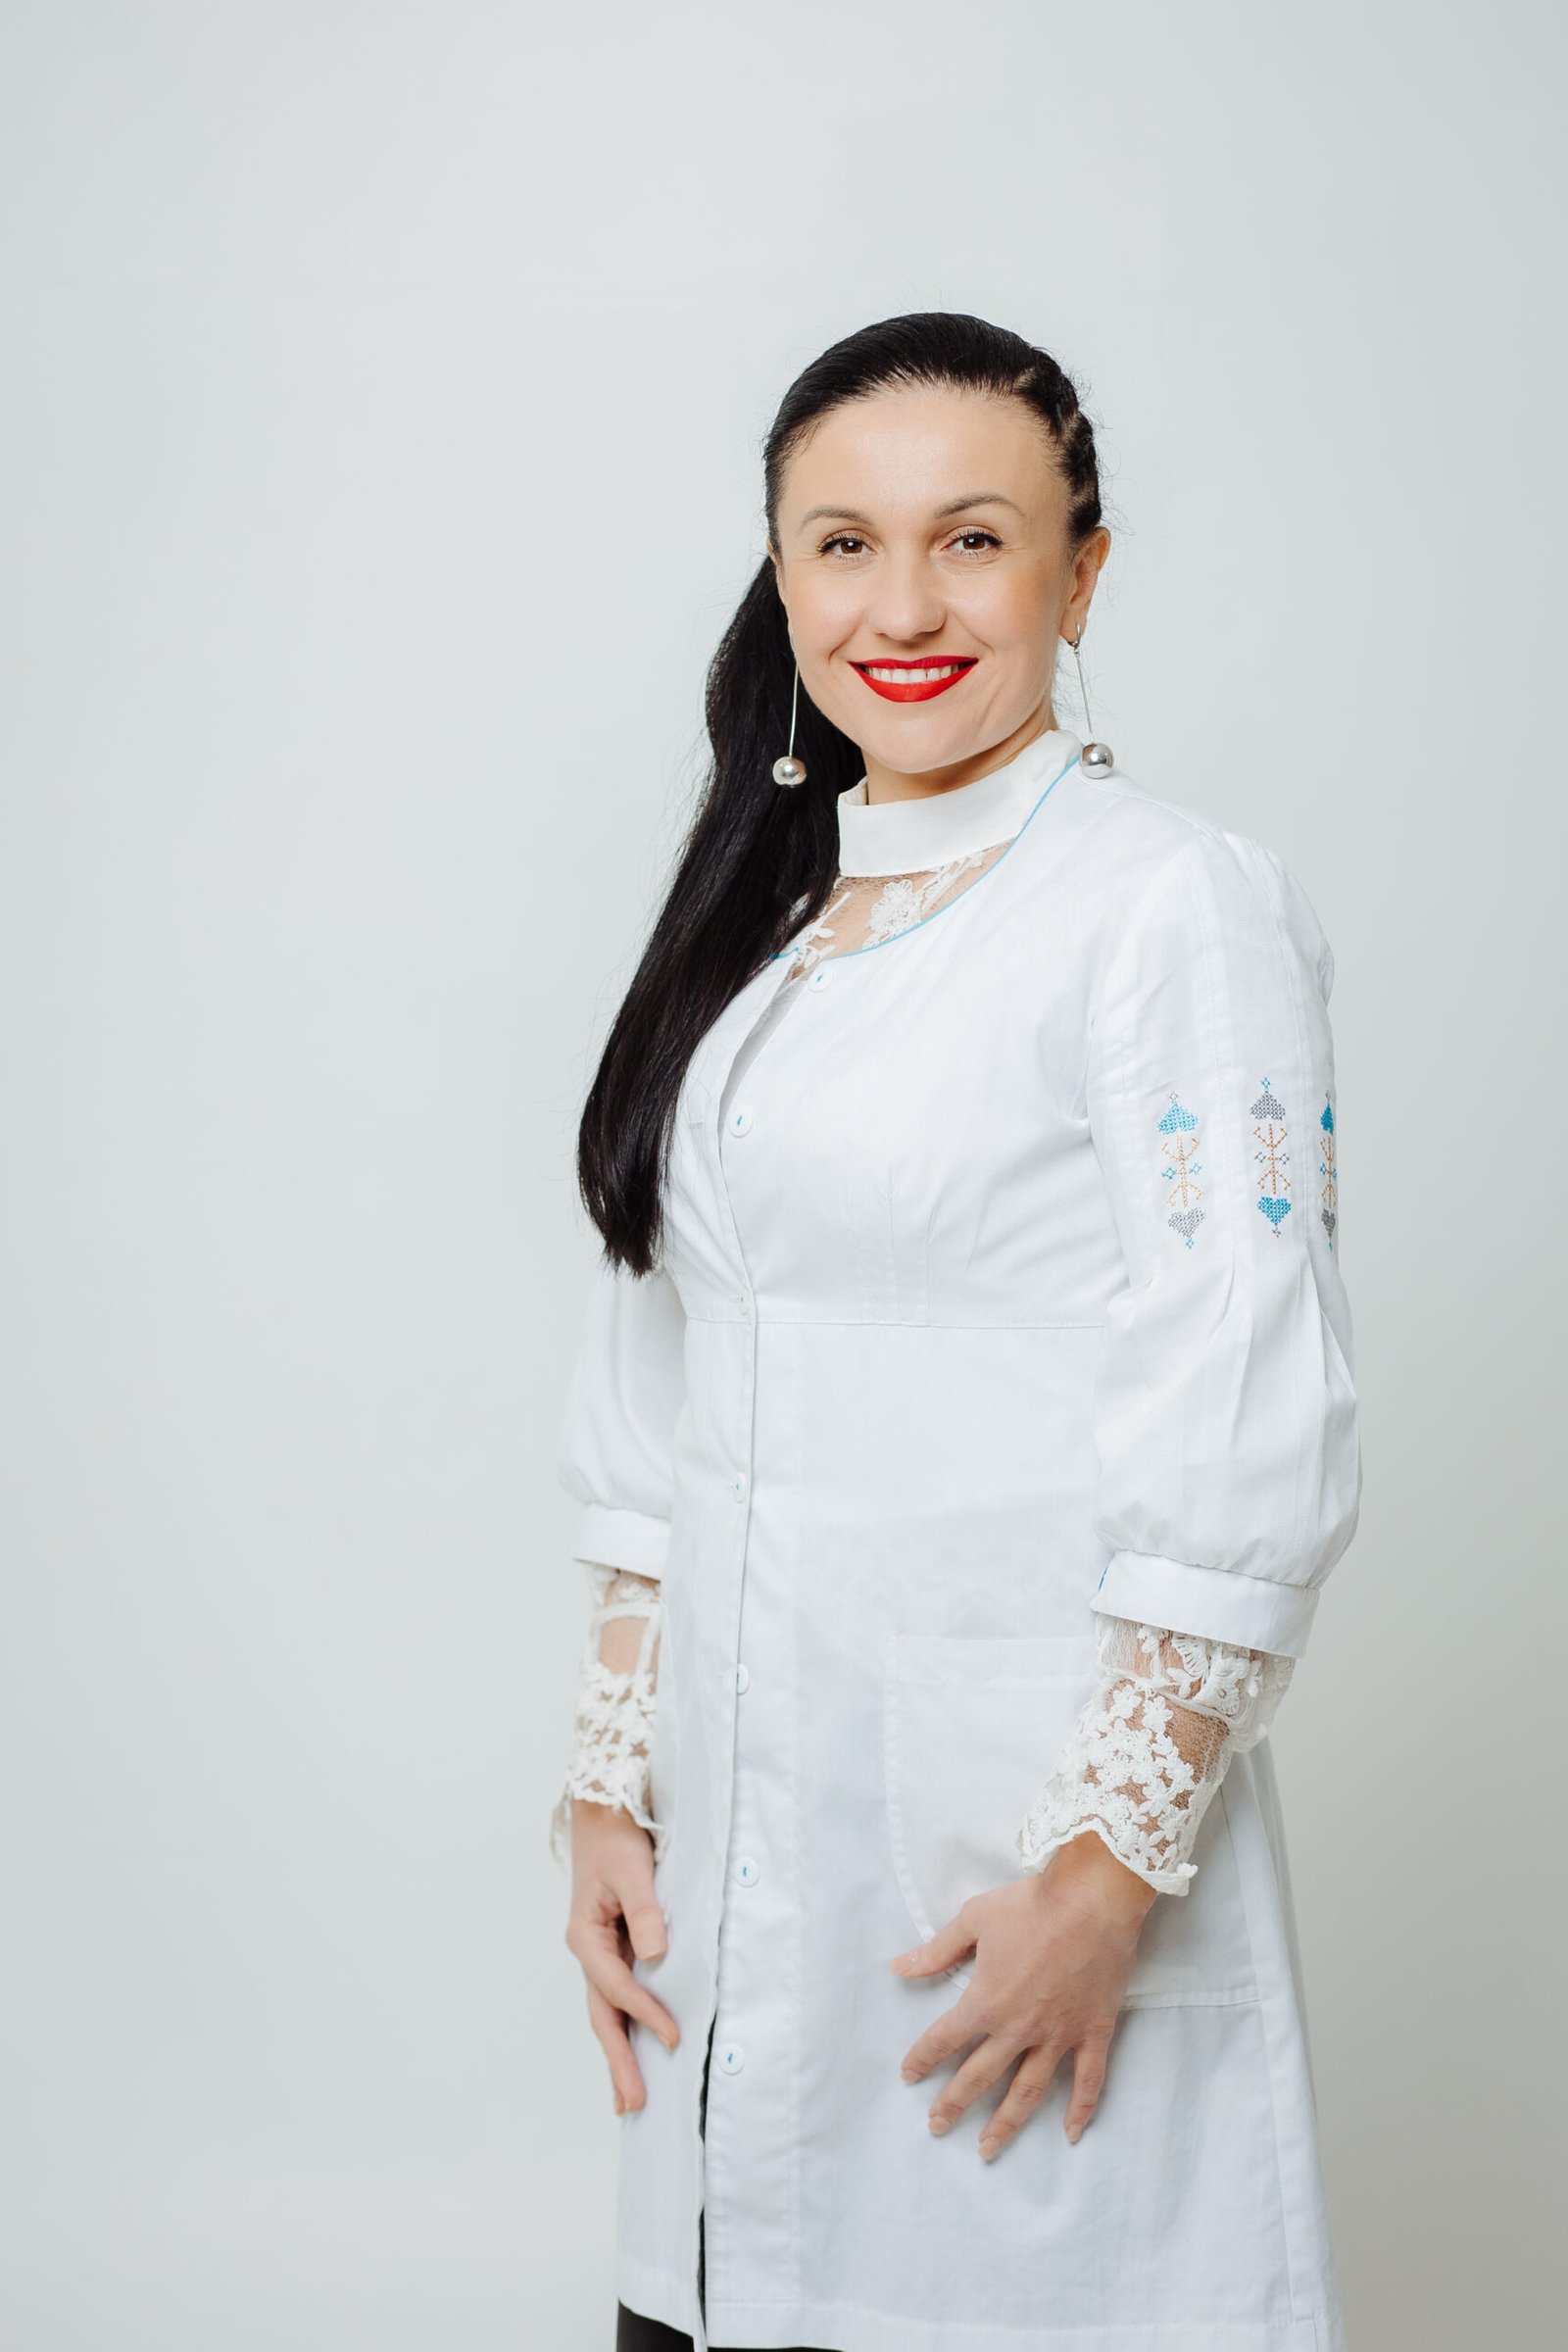 Maryana Ivanivna Borsenko - Vitamin Medical Center